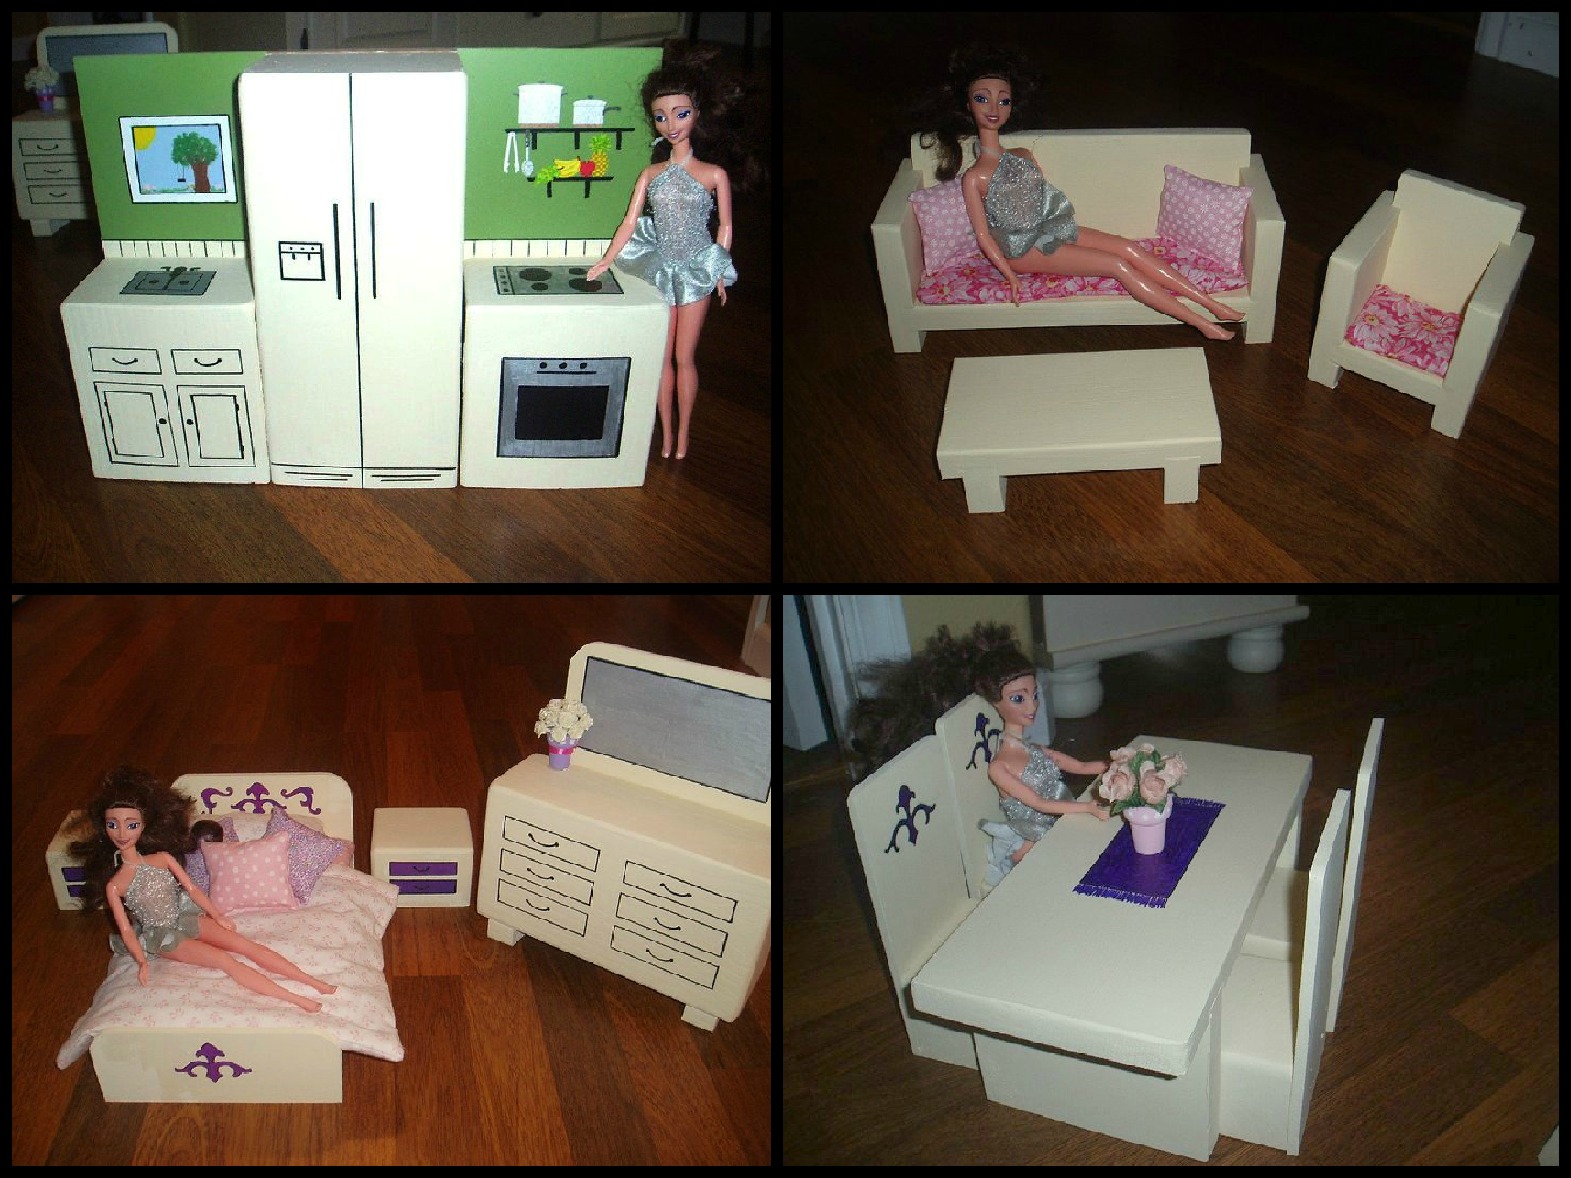 DIY Barbie Furniture